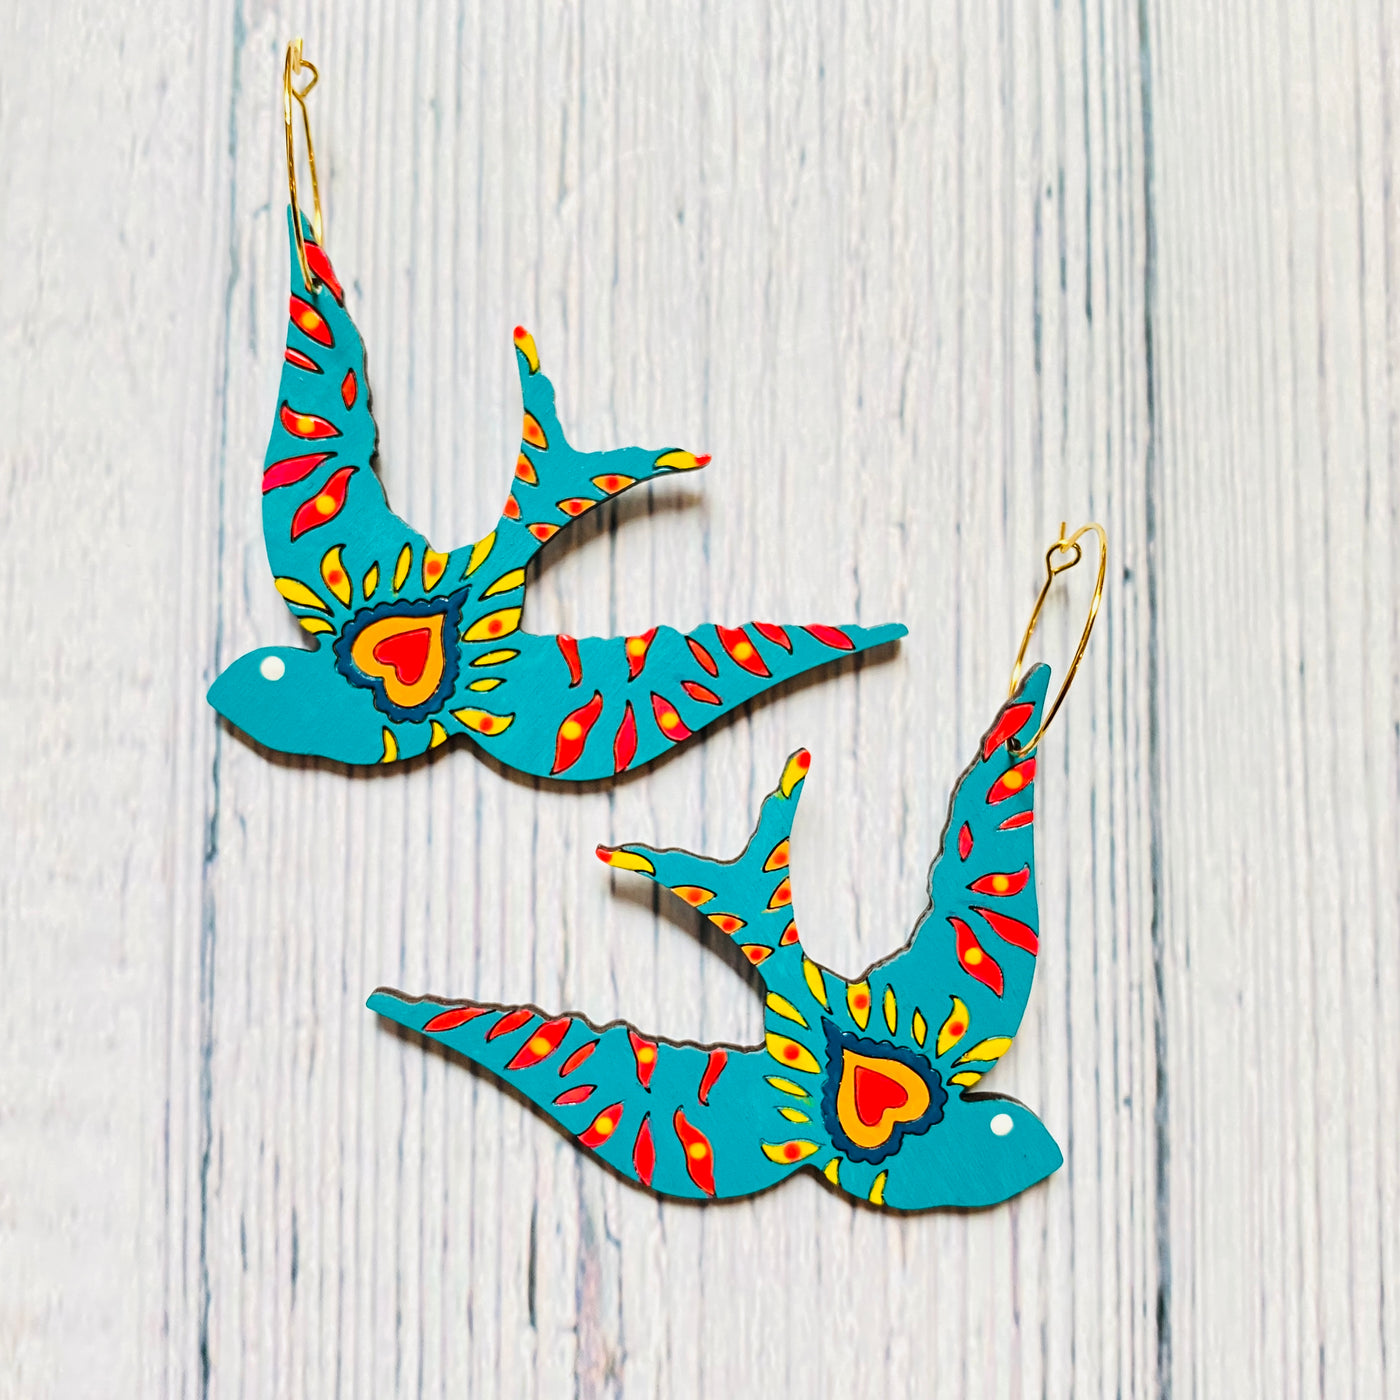 Golondrina bird turquoise wood hoop earrings with hand painted acrylic heart design.